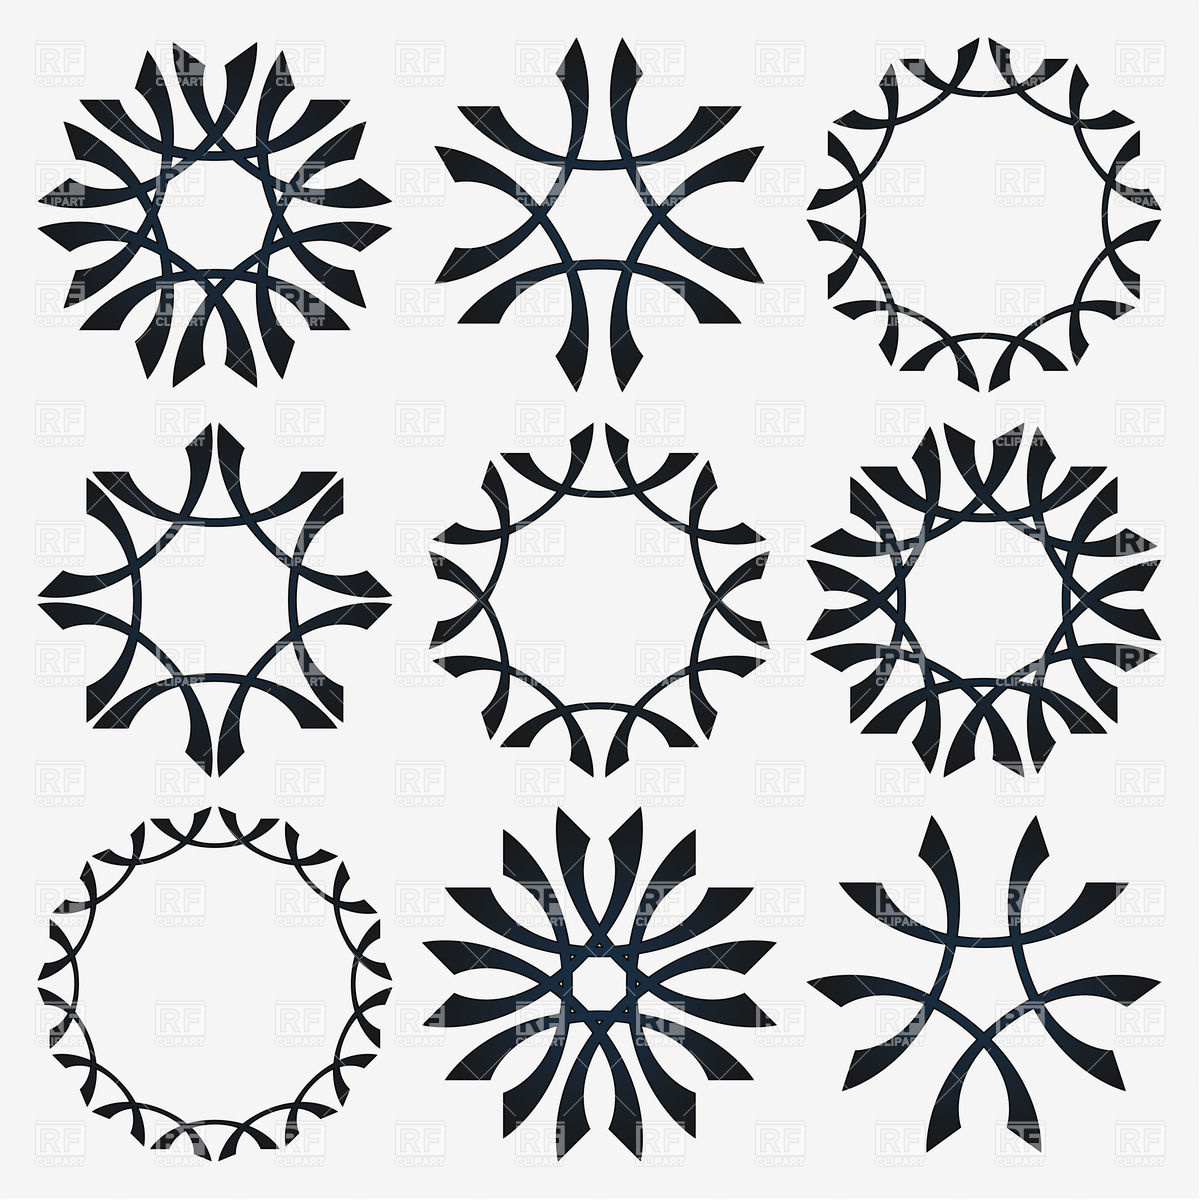 Round design elements - vignette and snowflake, Design elements ...